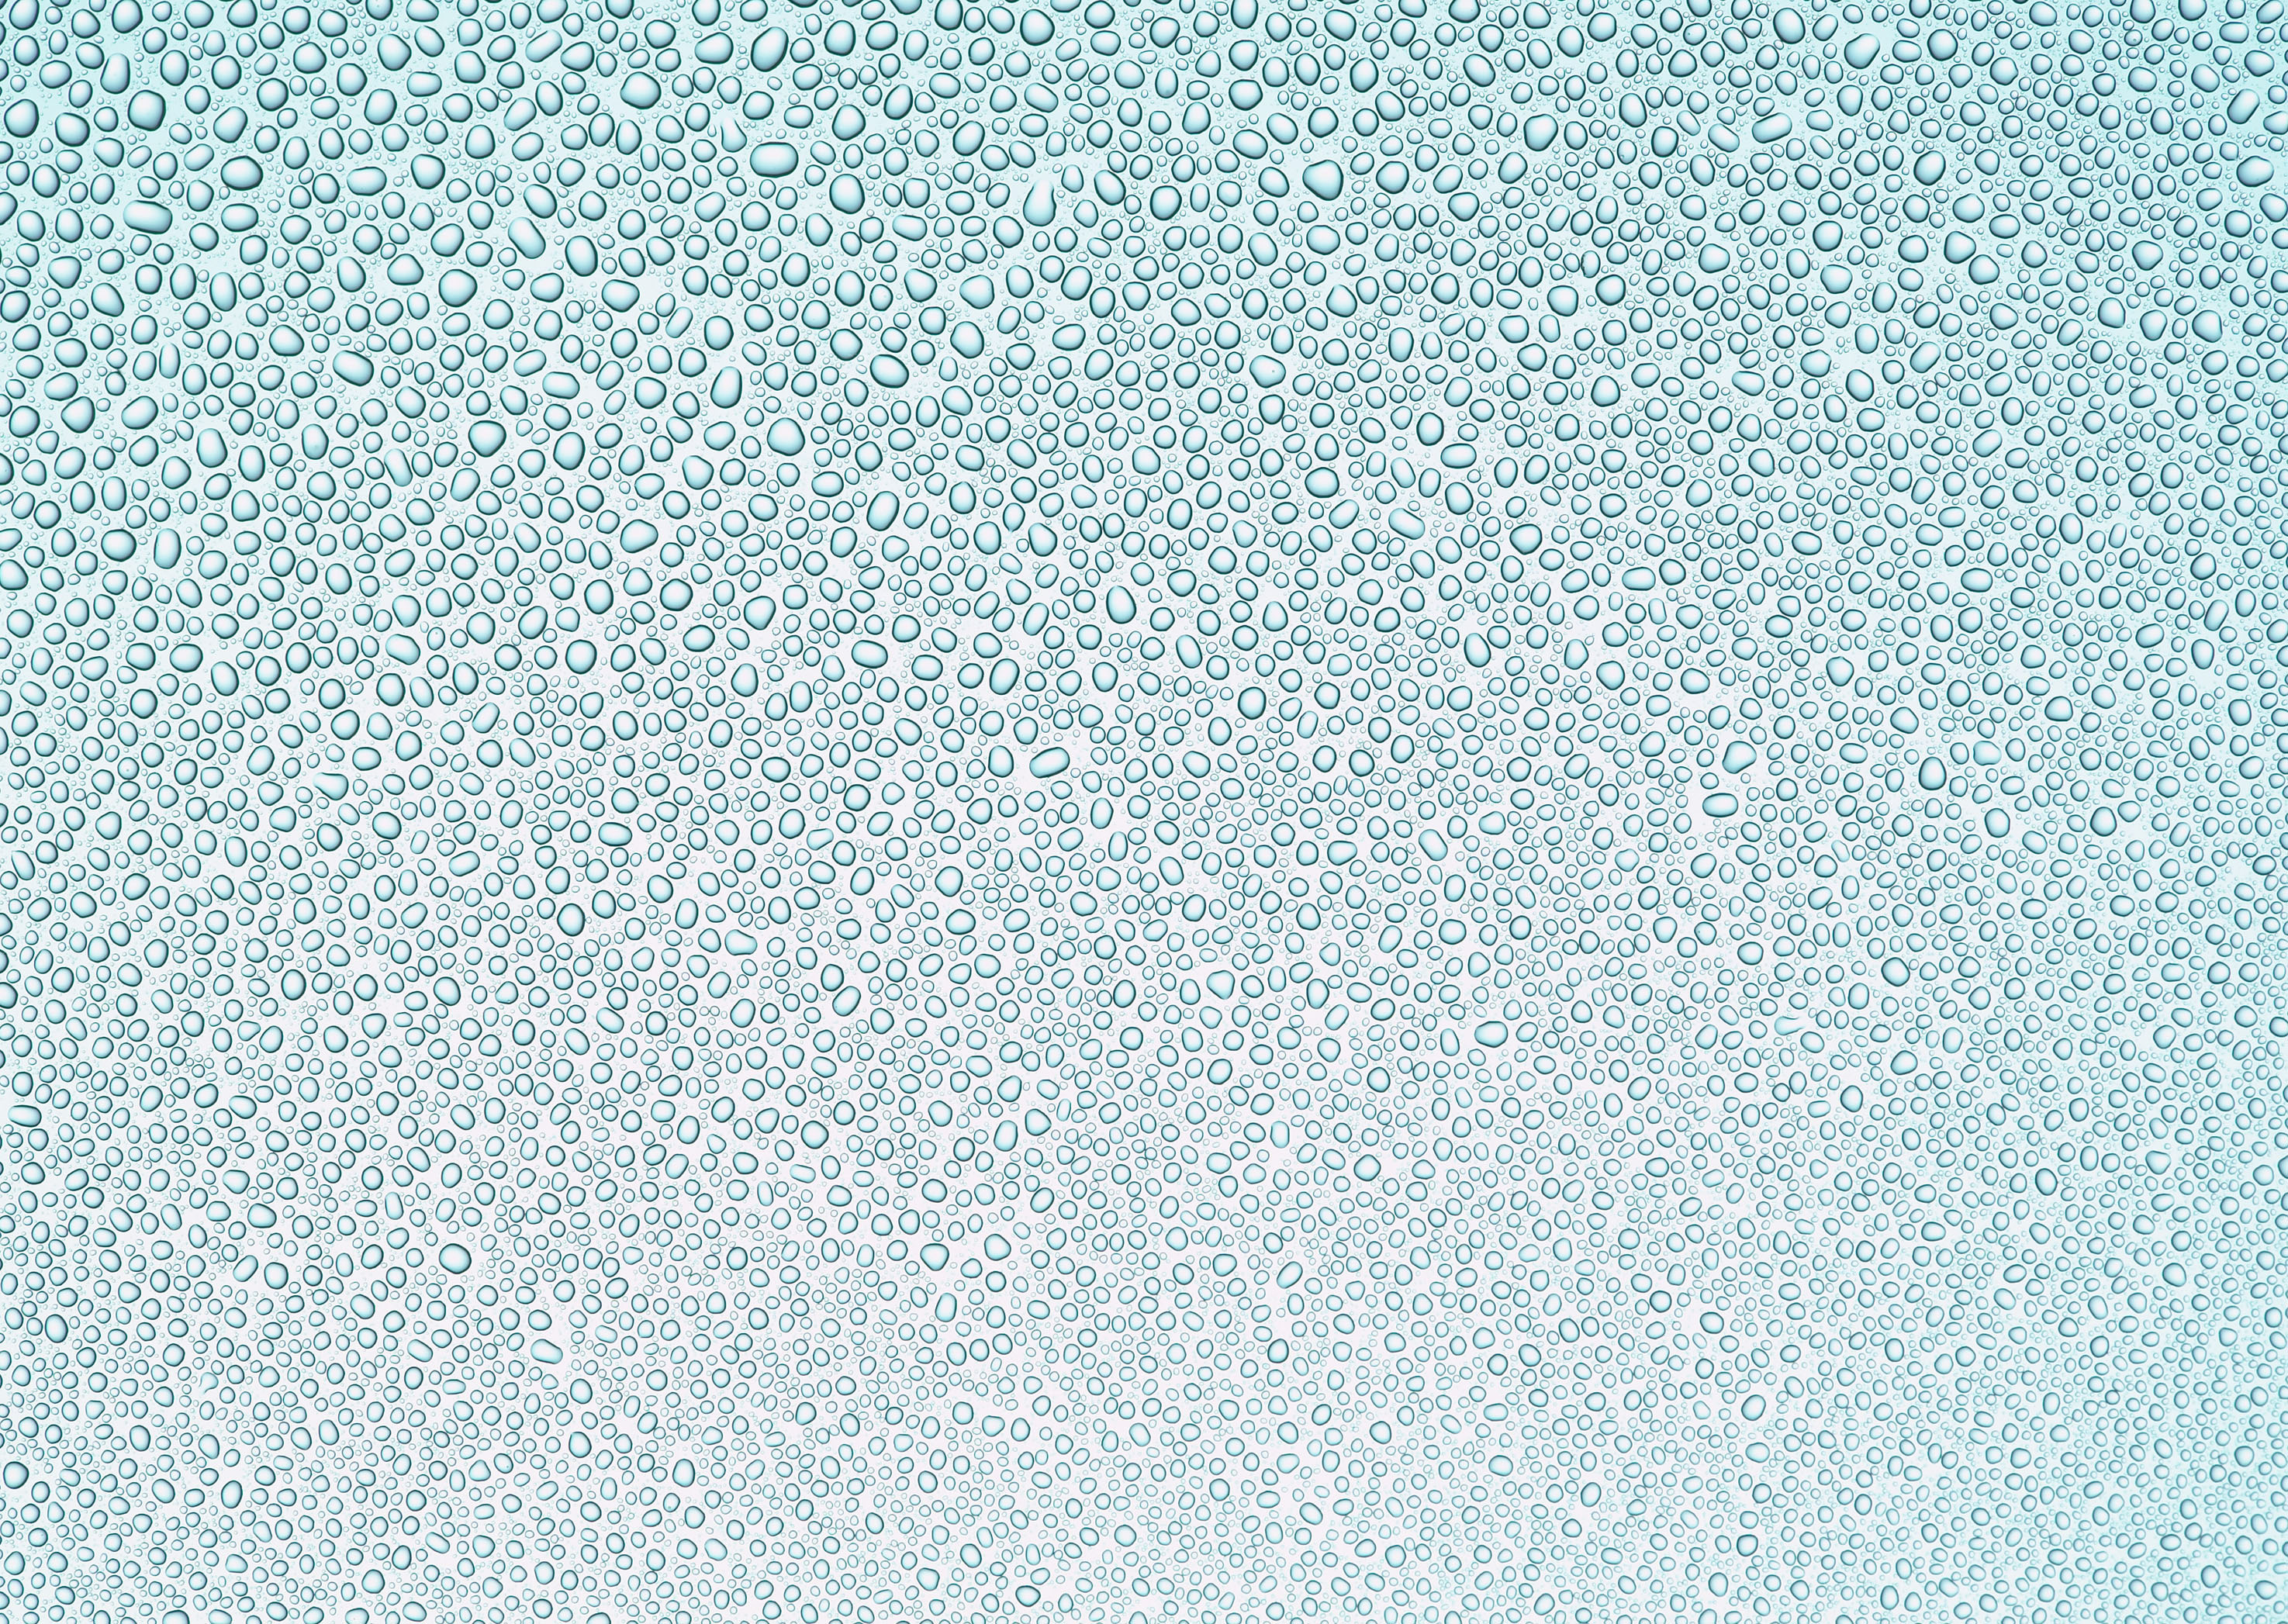 Fruits Water Droplets Hd Wallpaper HD Walls